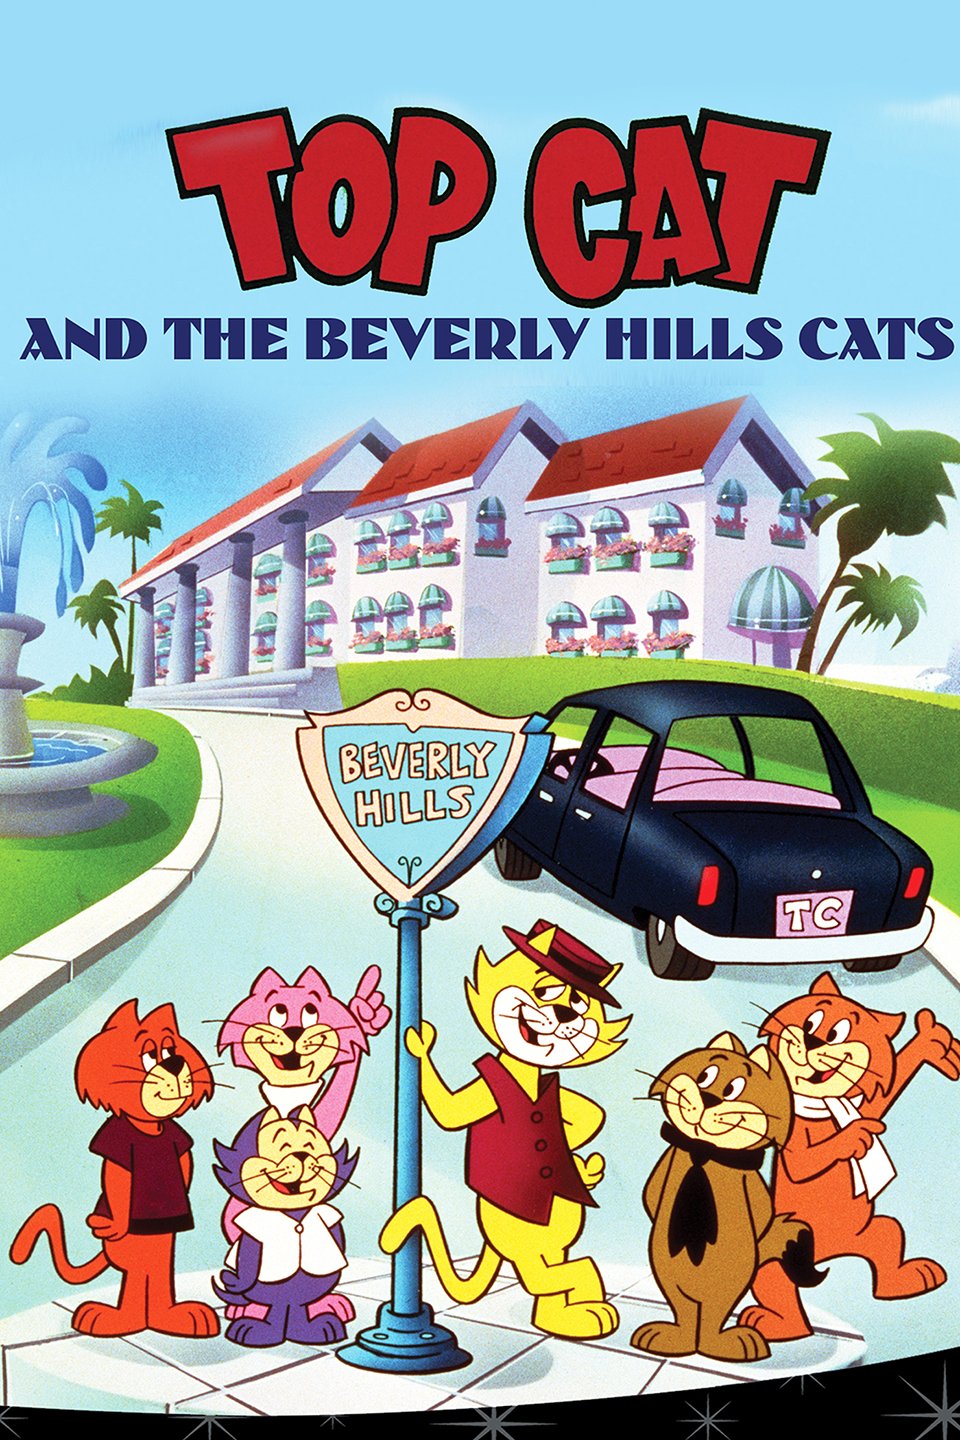 Soar belønning ingeniørarbejde Top Cat and the Beverly Hills Cats - Rotten Tomatoes